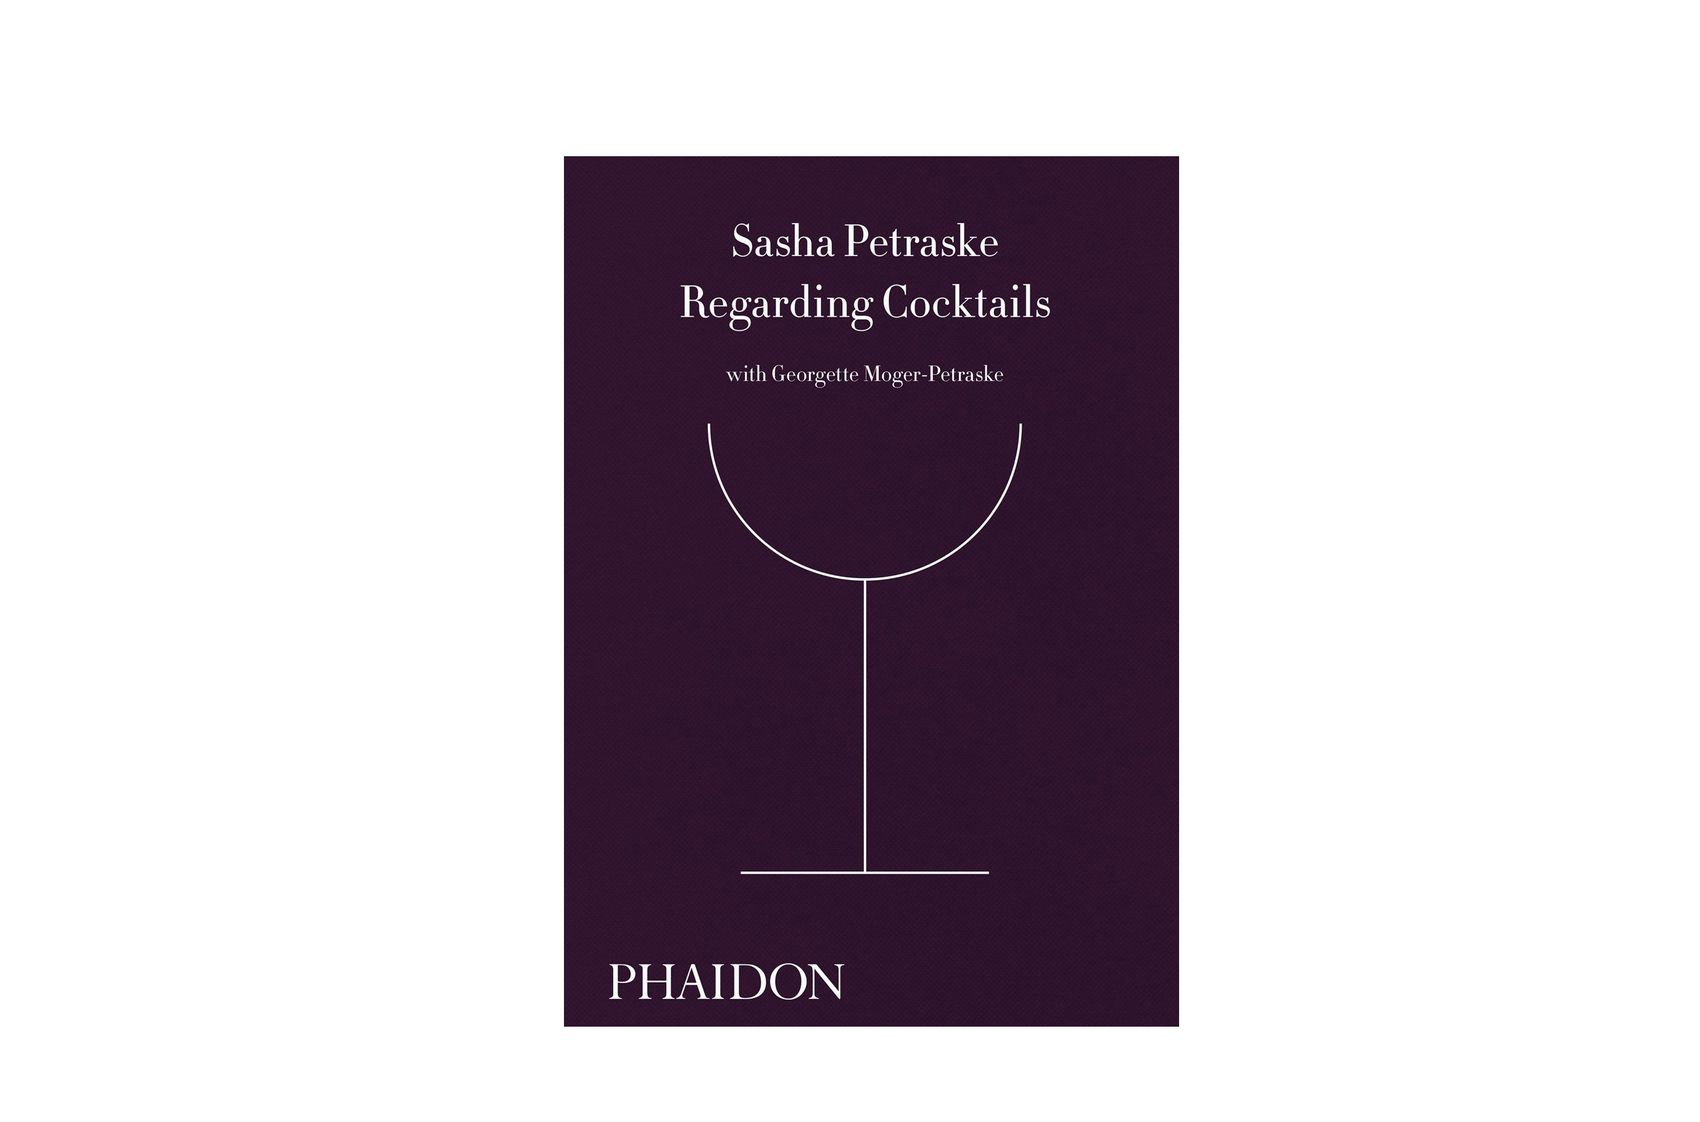 Sasha petraske regarding cocktails pdf